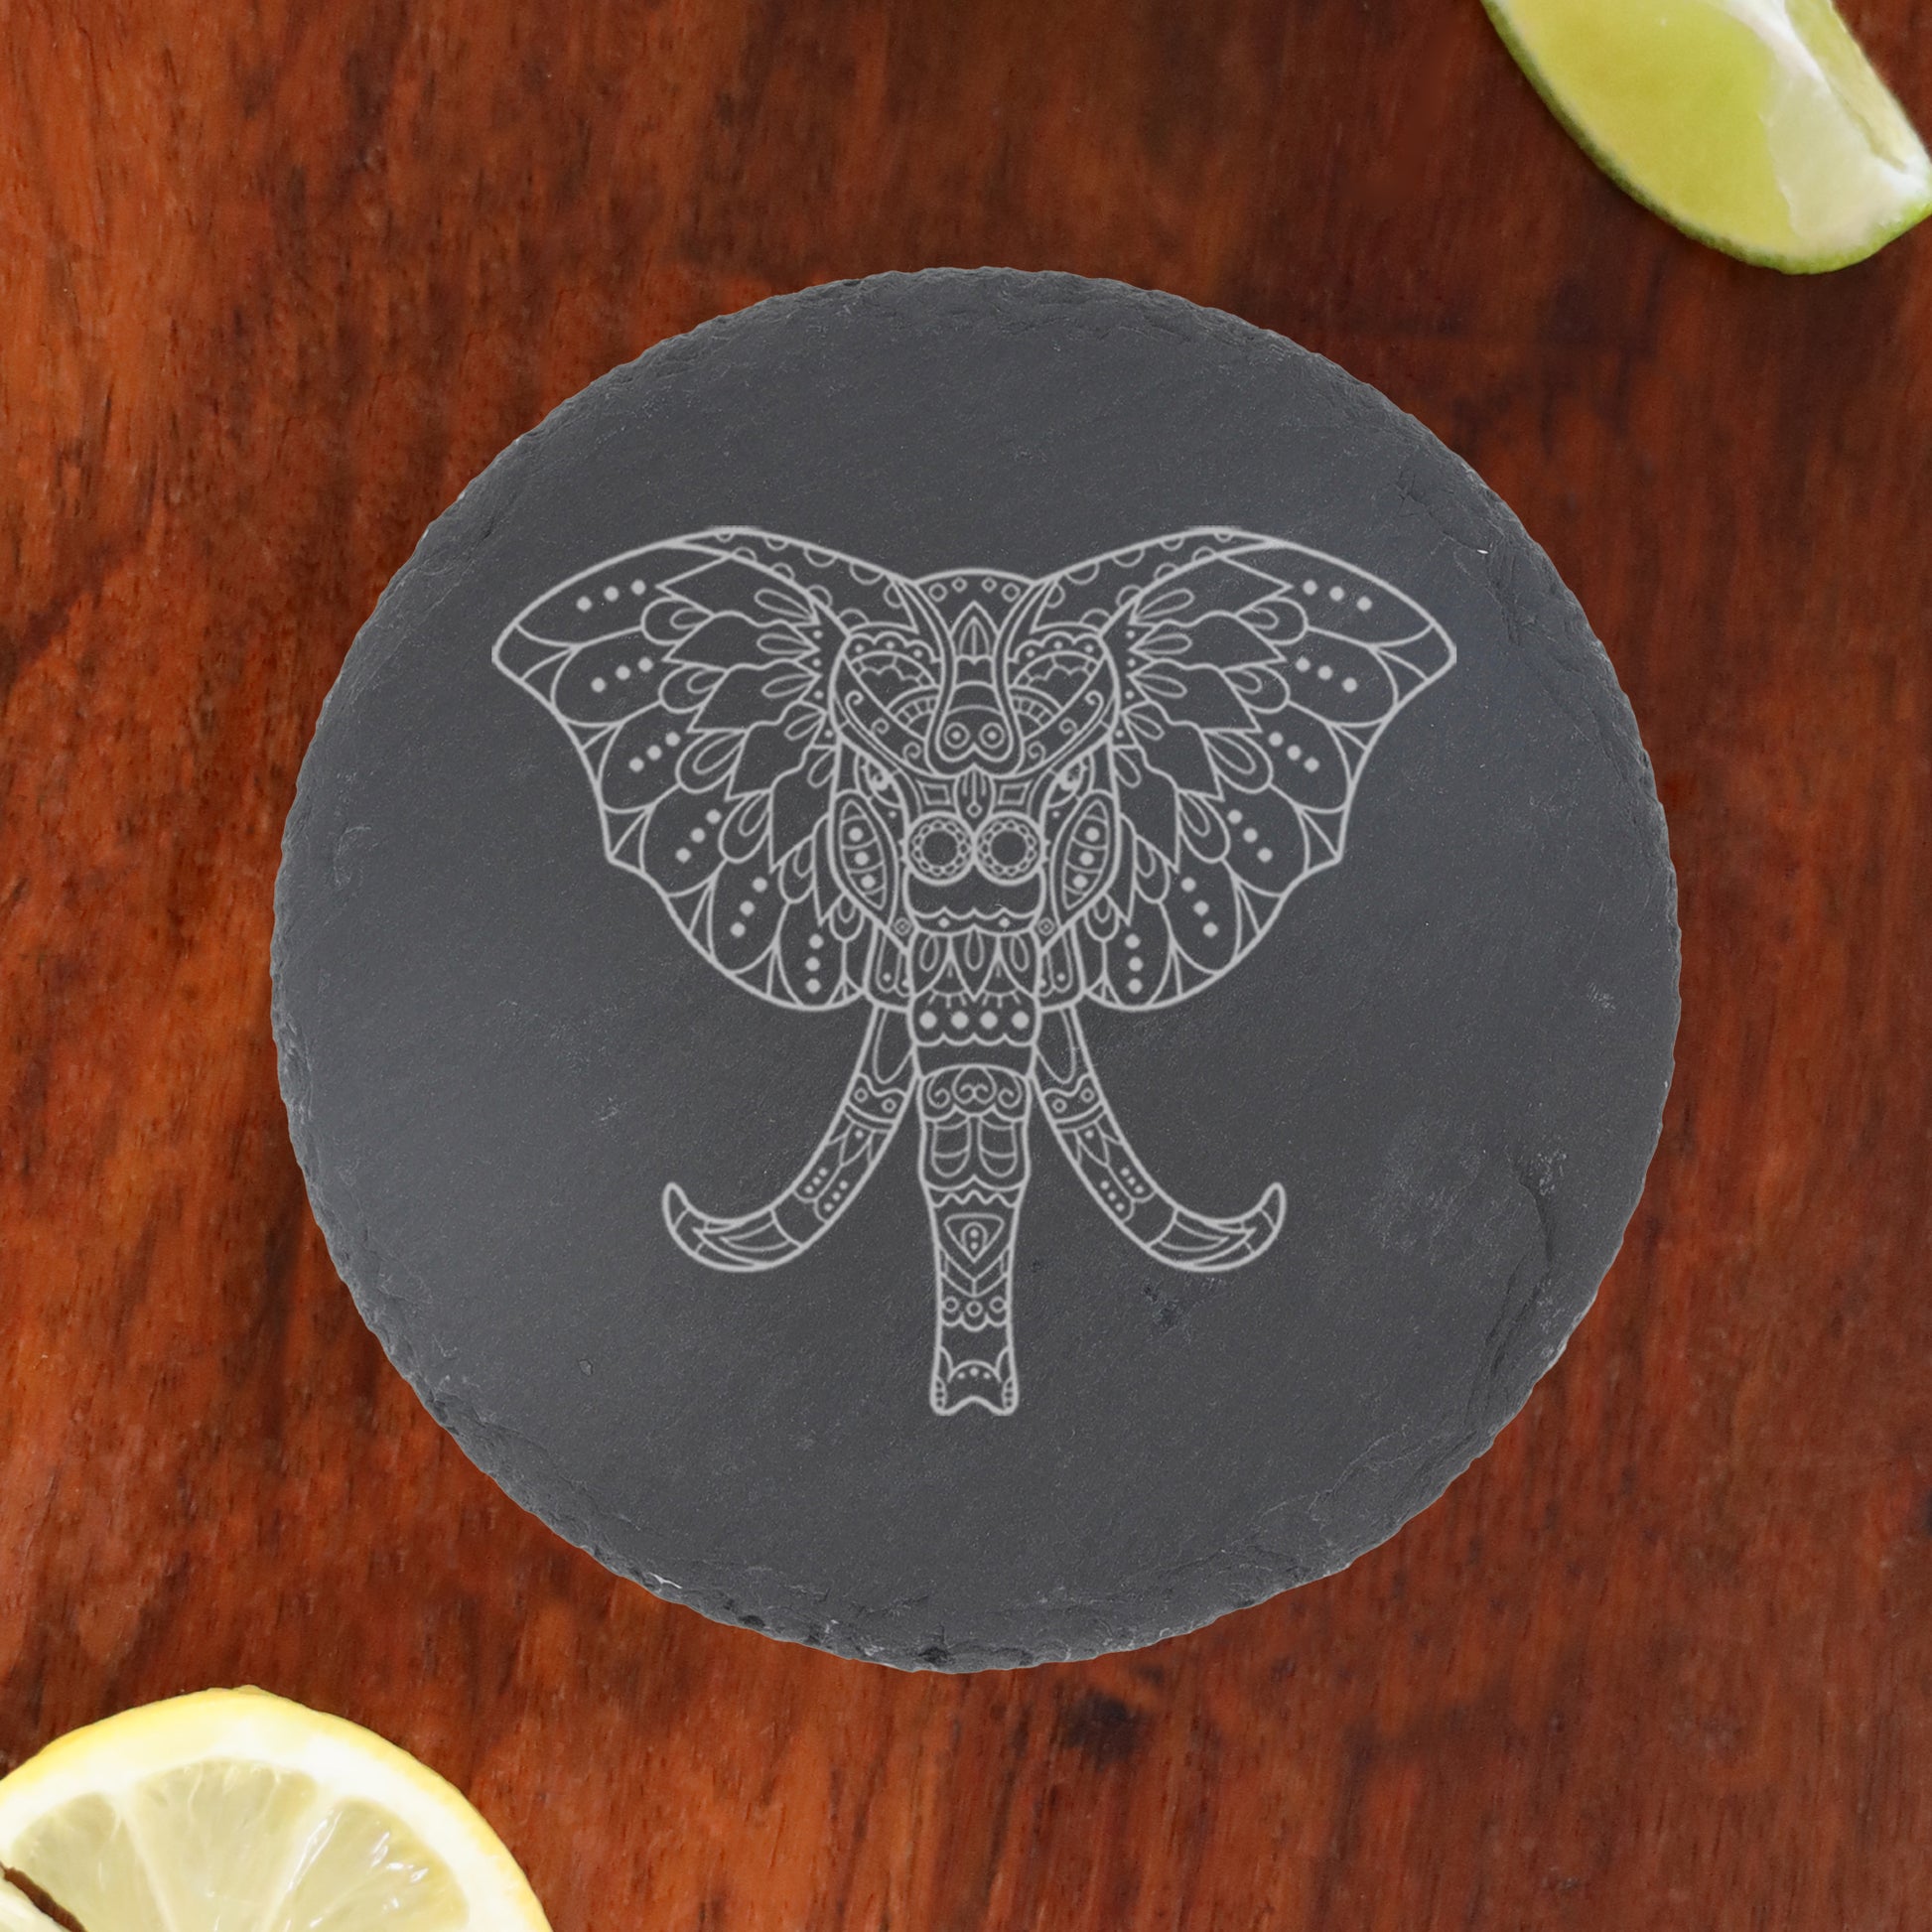 Engraved Elephant Mandala Whisky Glass and/or Coaster Set  - Always Looking Good - Round Coaster Only  